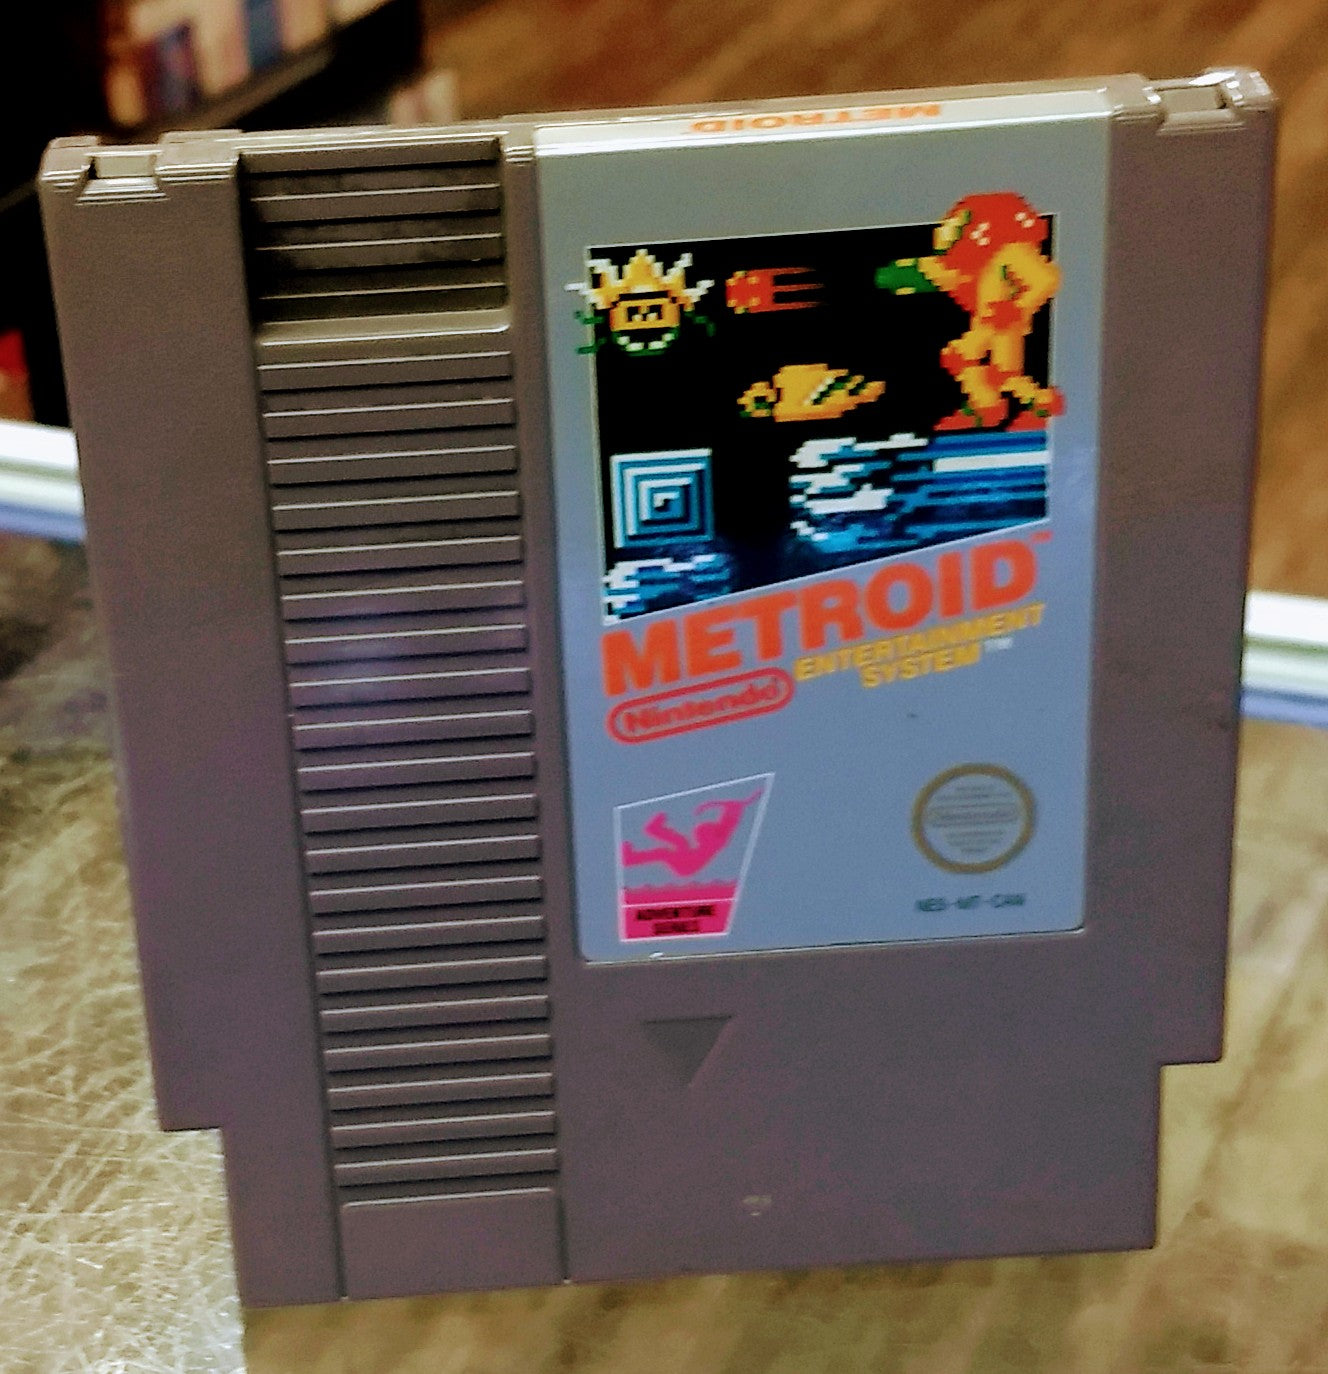 METROID (NINTENDO NES) - jeux video game-x